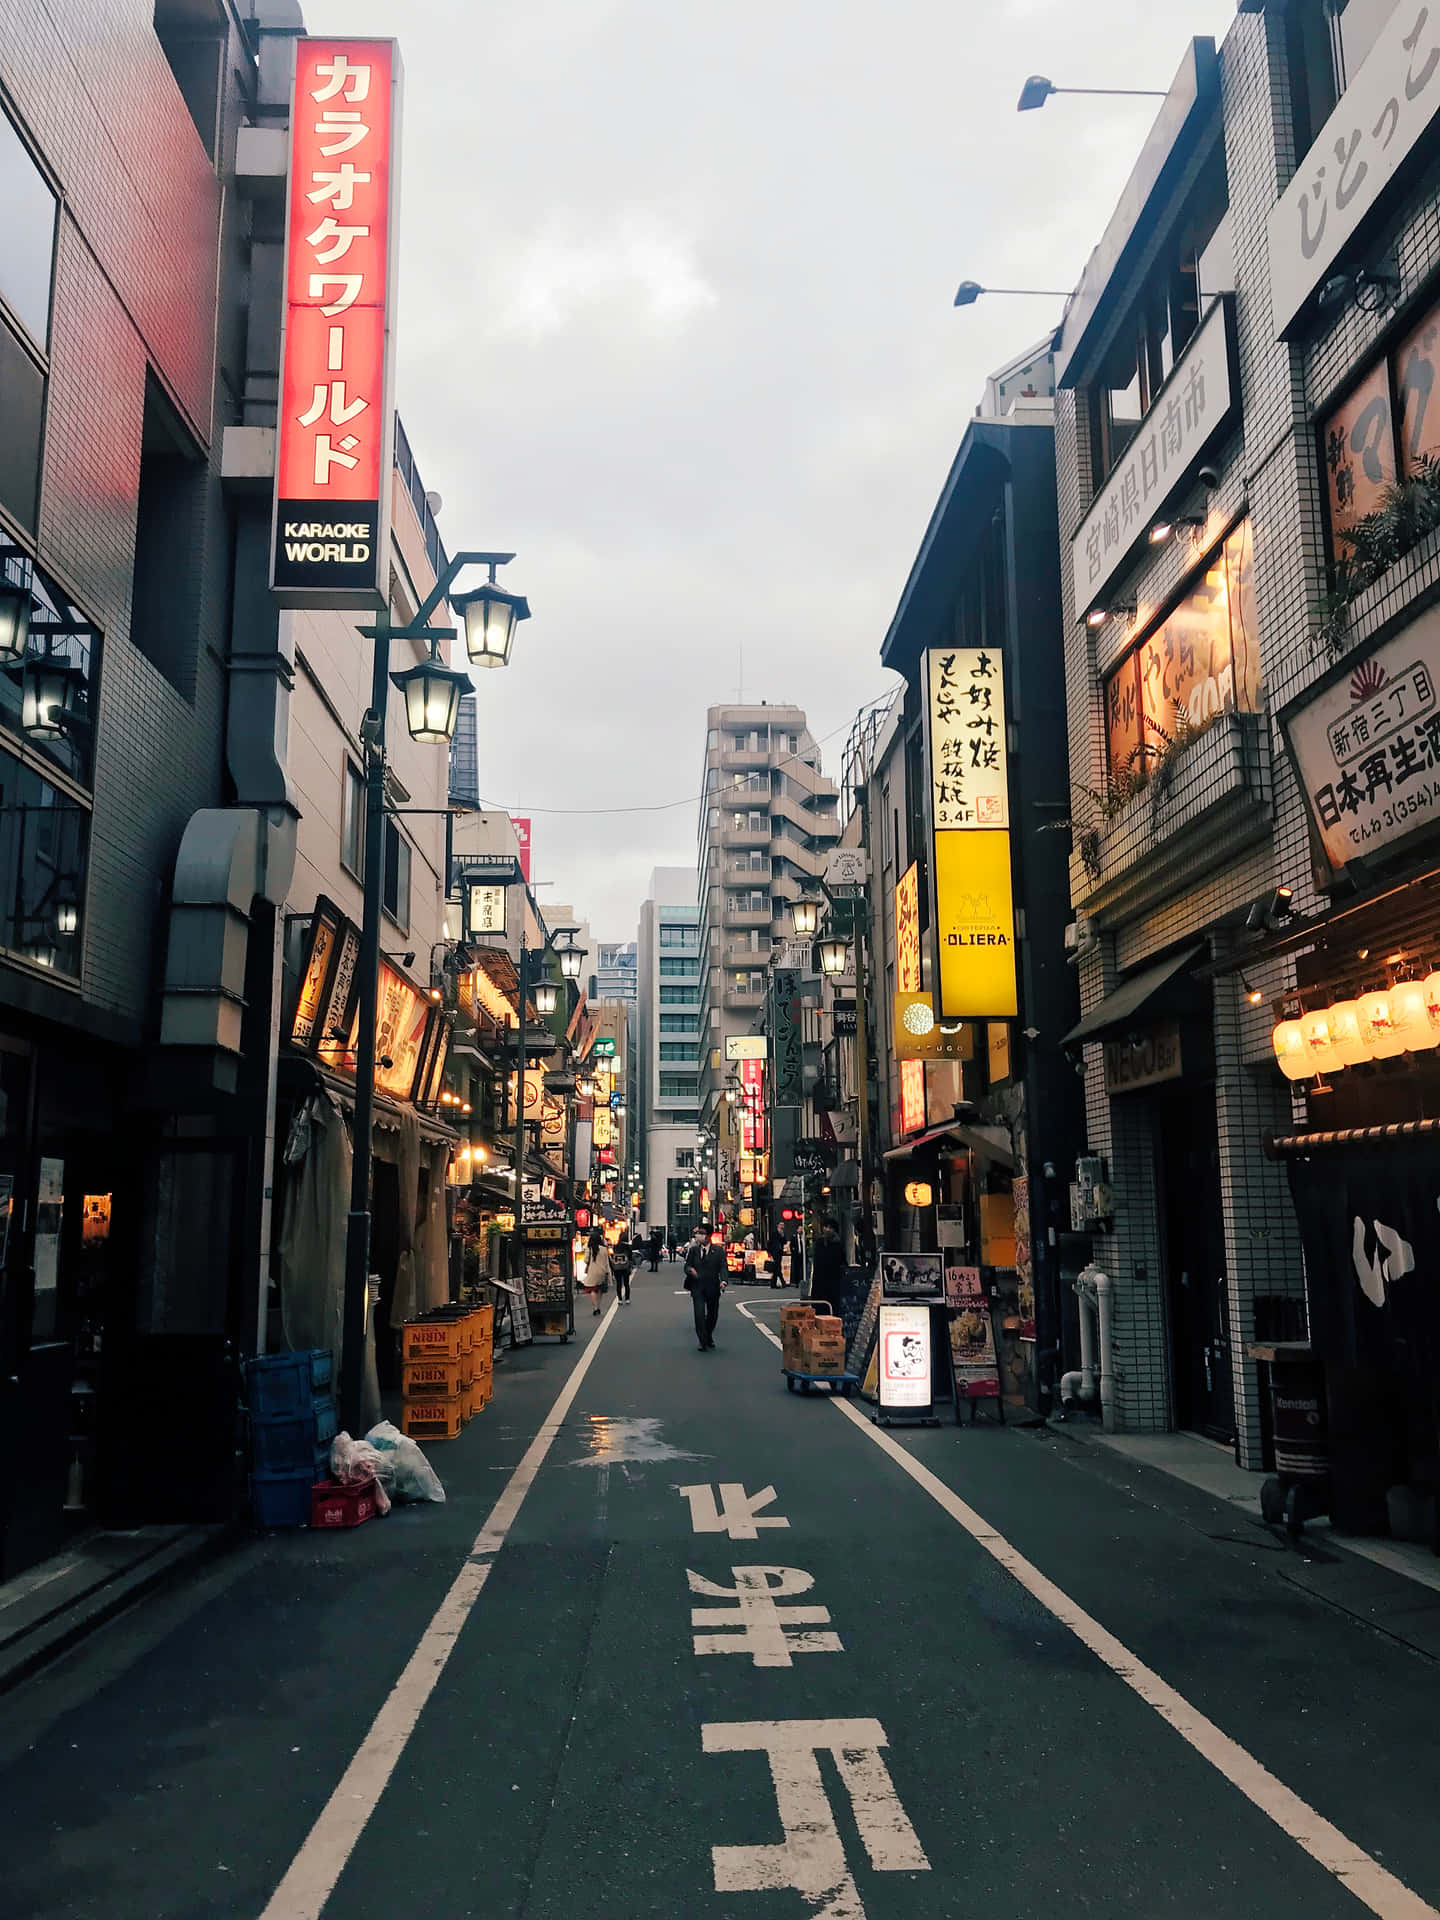 Fondode Pantalla De Tokio: Calle Pequeña Y Estrecha.